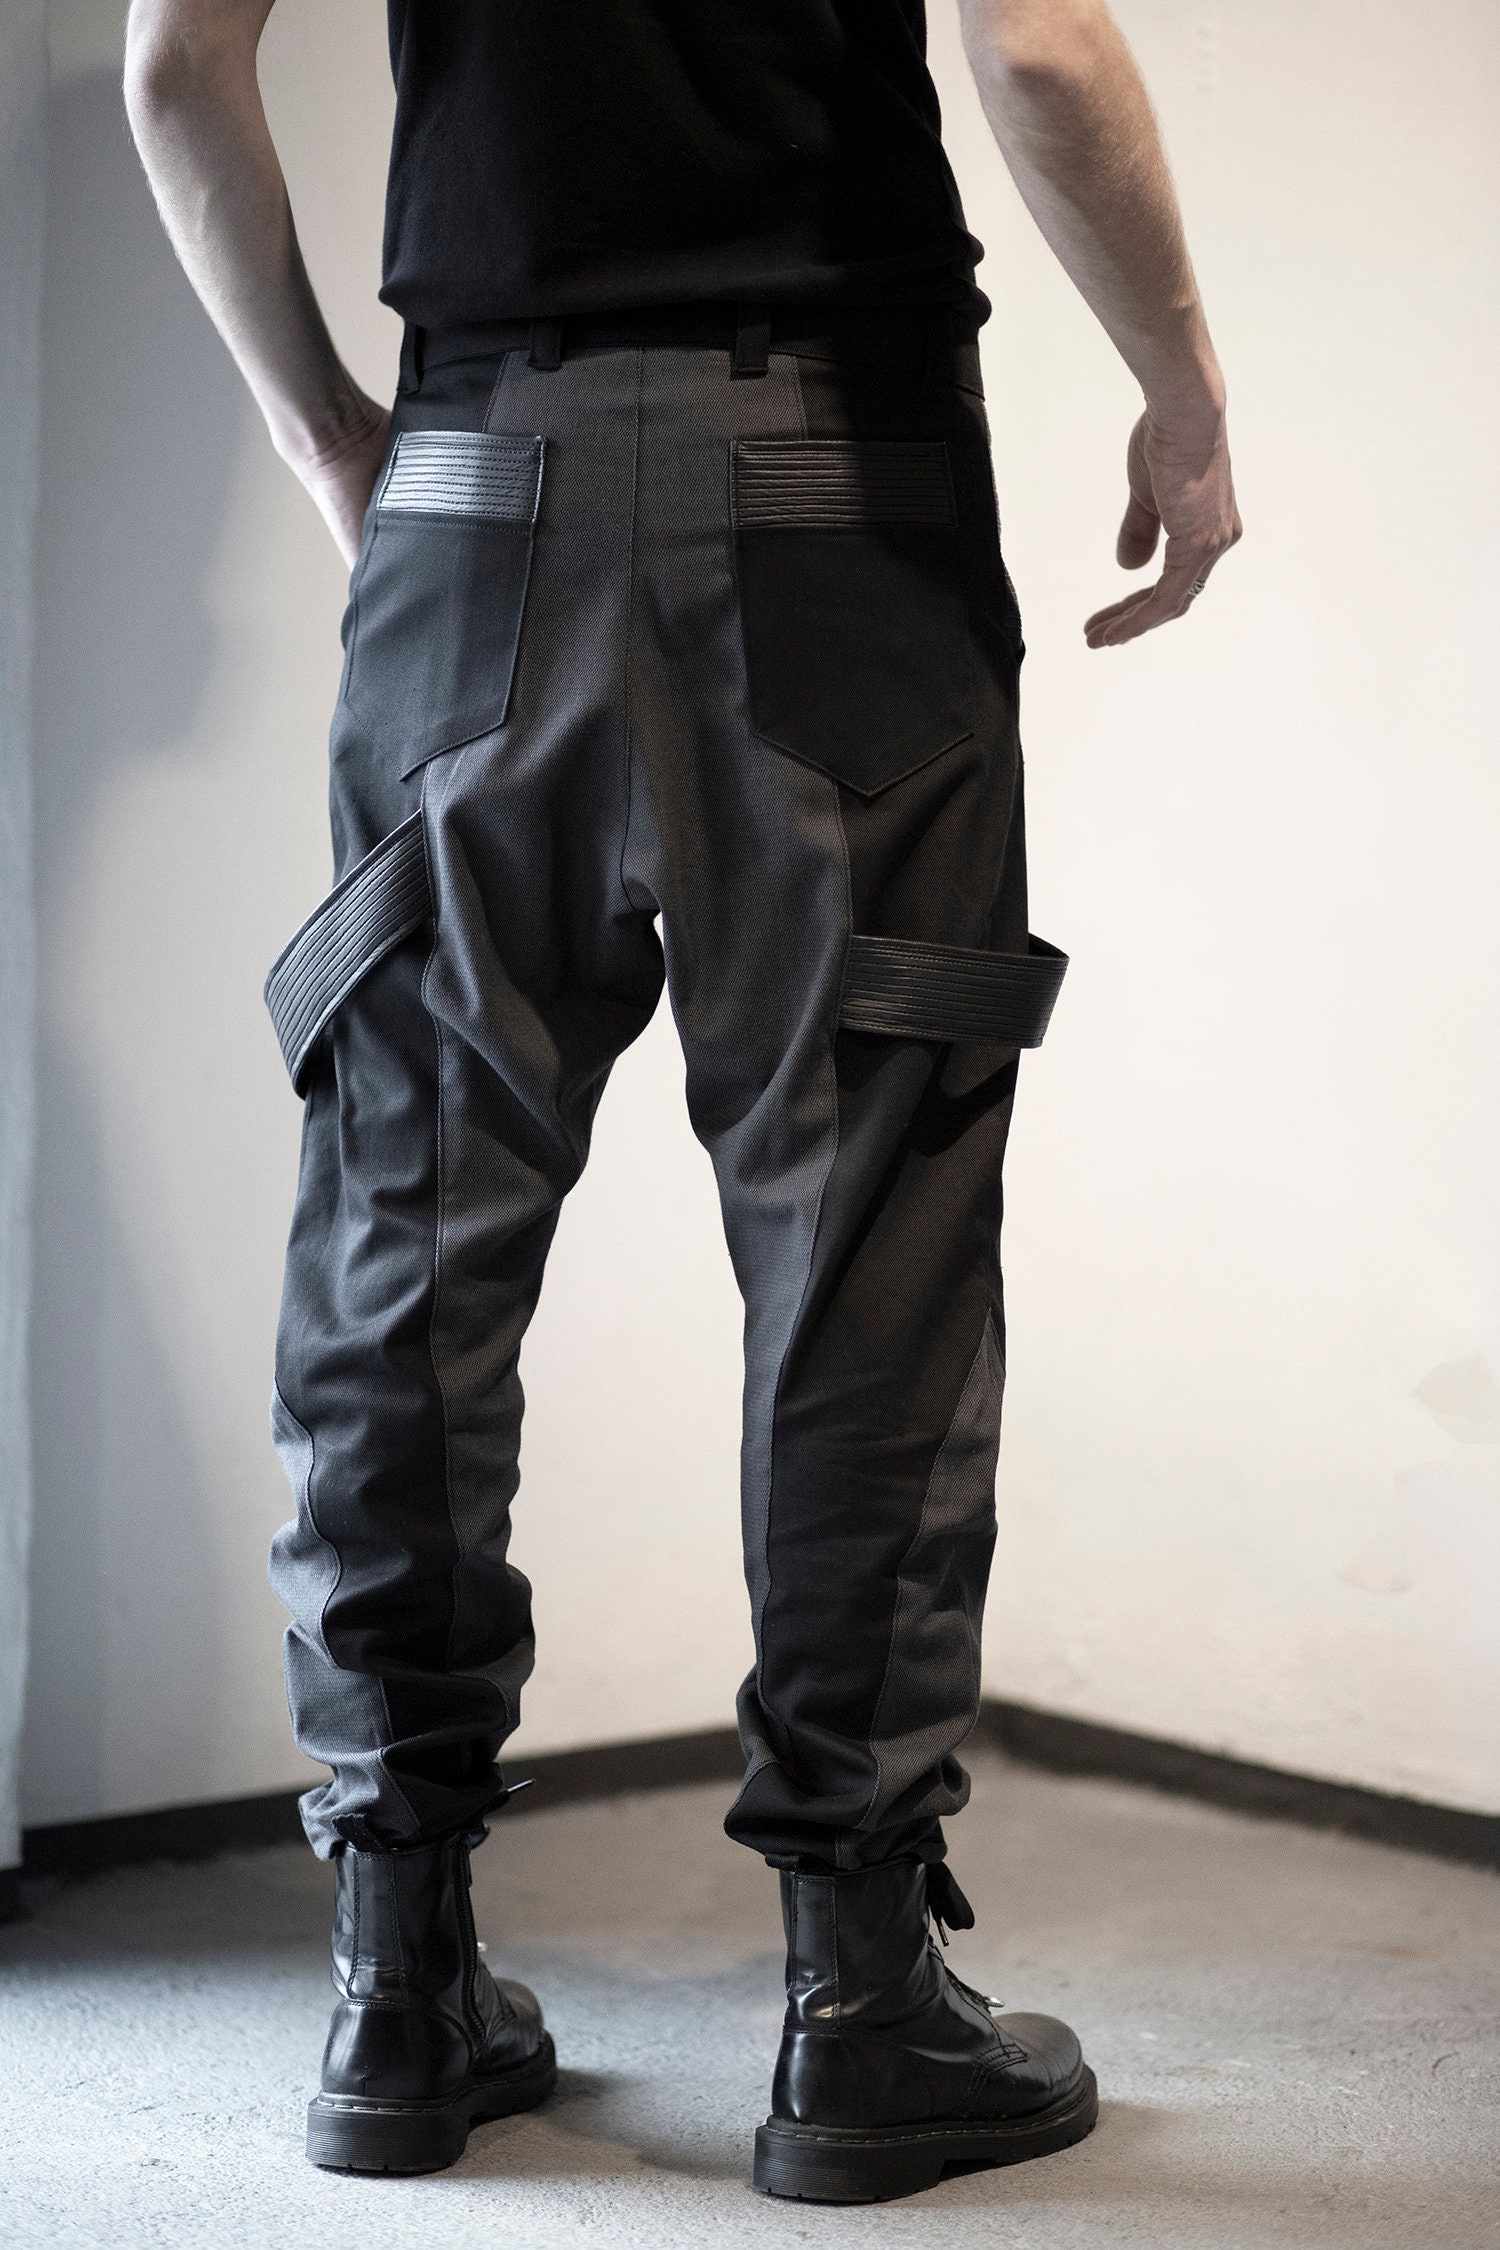 Vapour Pants men Pants-cyberpunk-alternative Men Clothing-men Street  Fashion-avantgarde Clothing-futuristic Clothing-unique-dark Fashion -   Israel